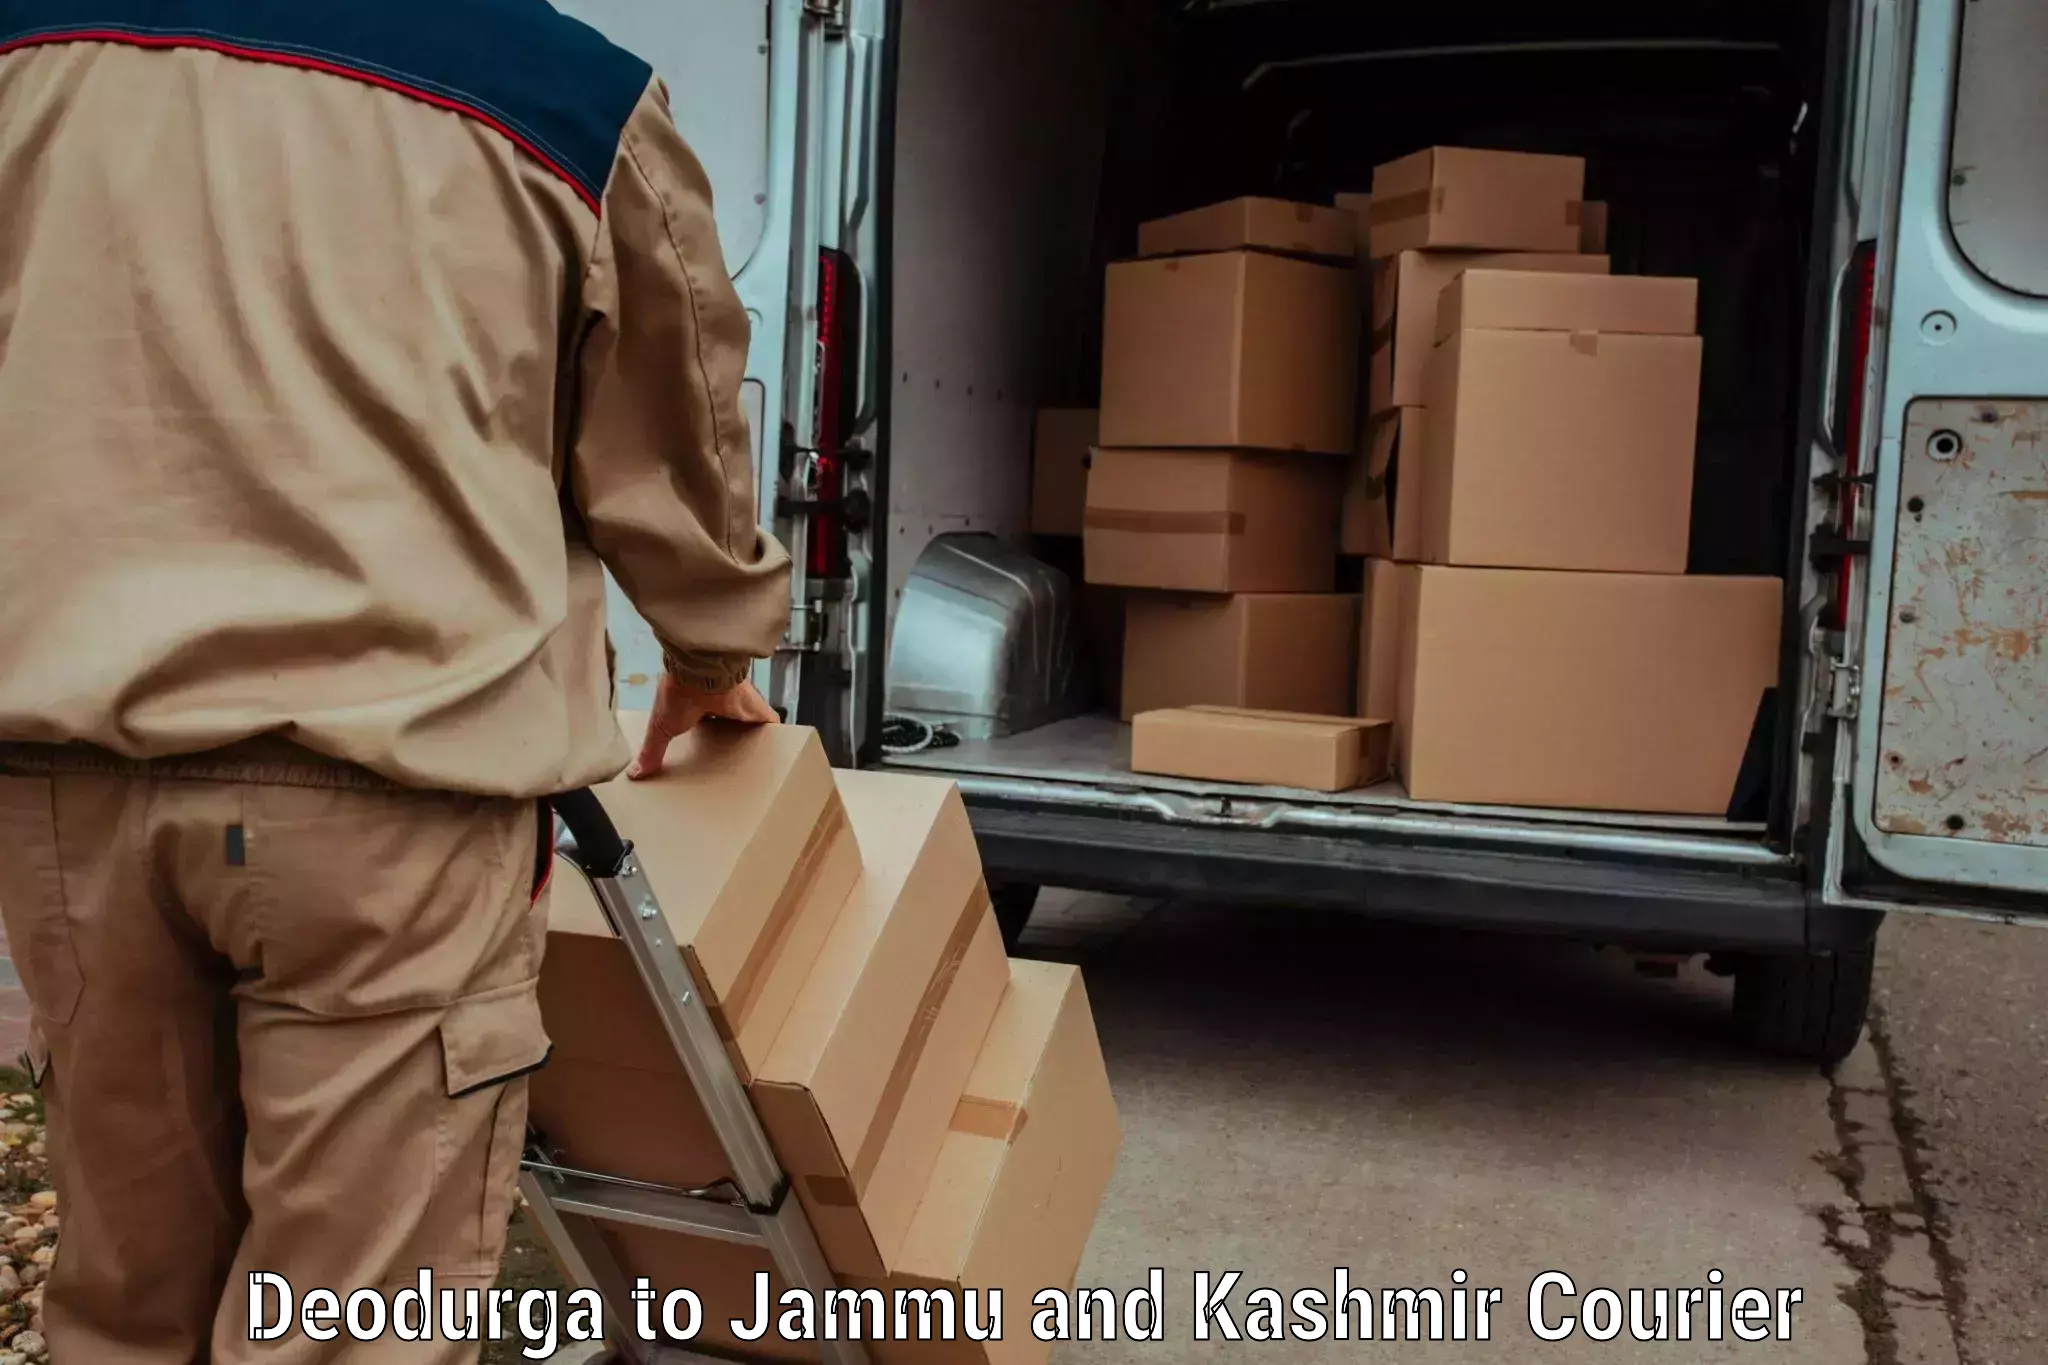 End-to-end delivery Deodurga to Srinagar Kashmir